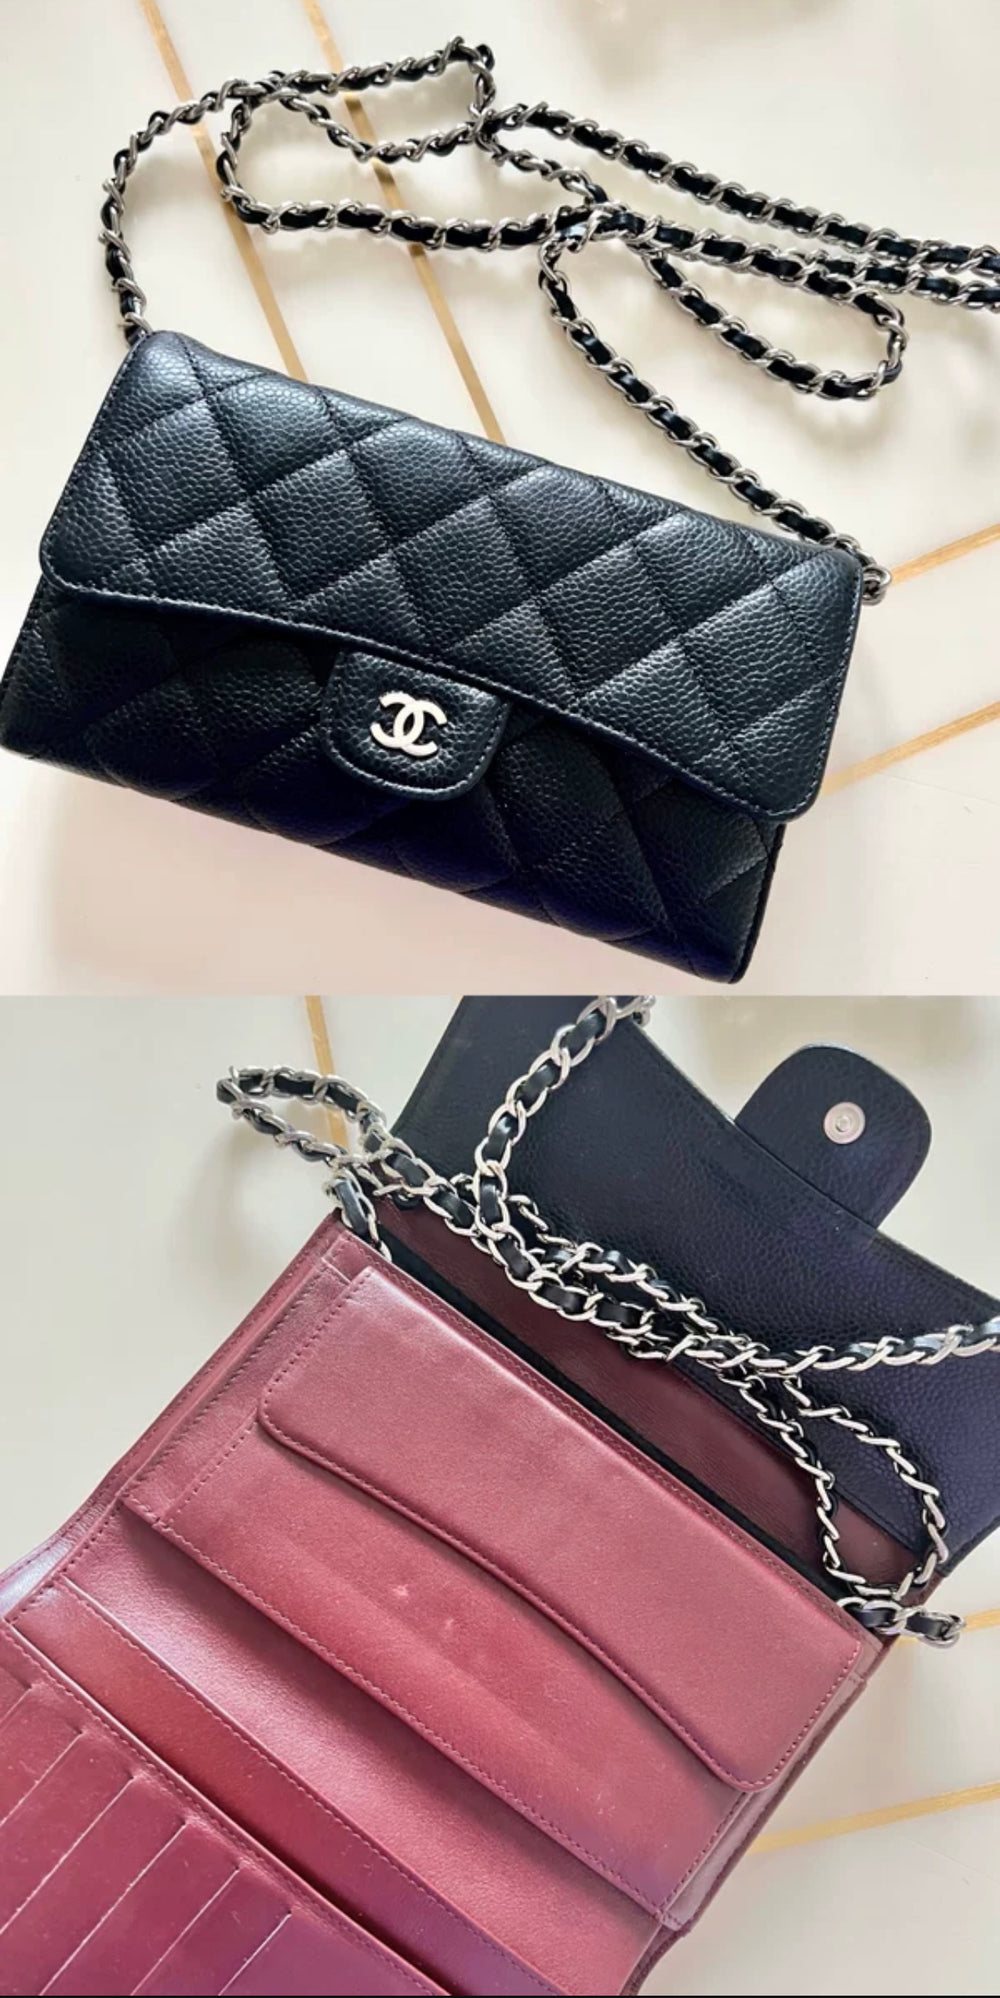 Chiara Z. review of Converter Kit for Chanel Long Wallet